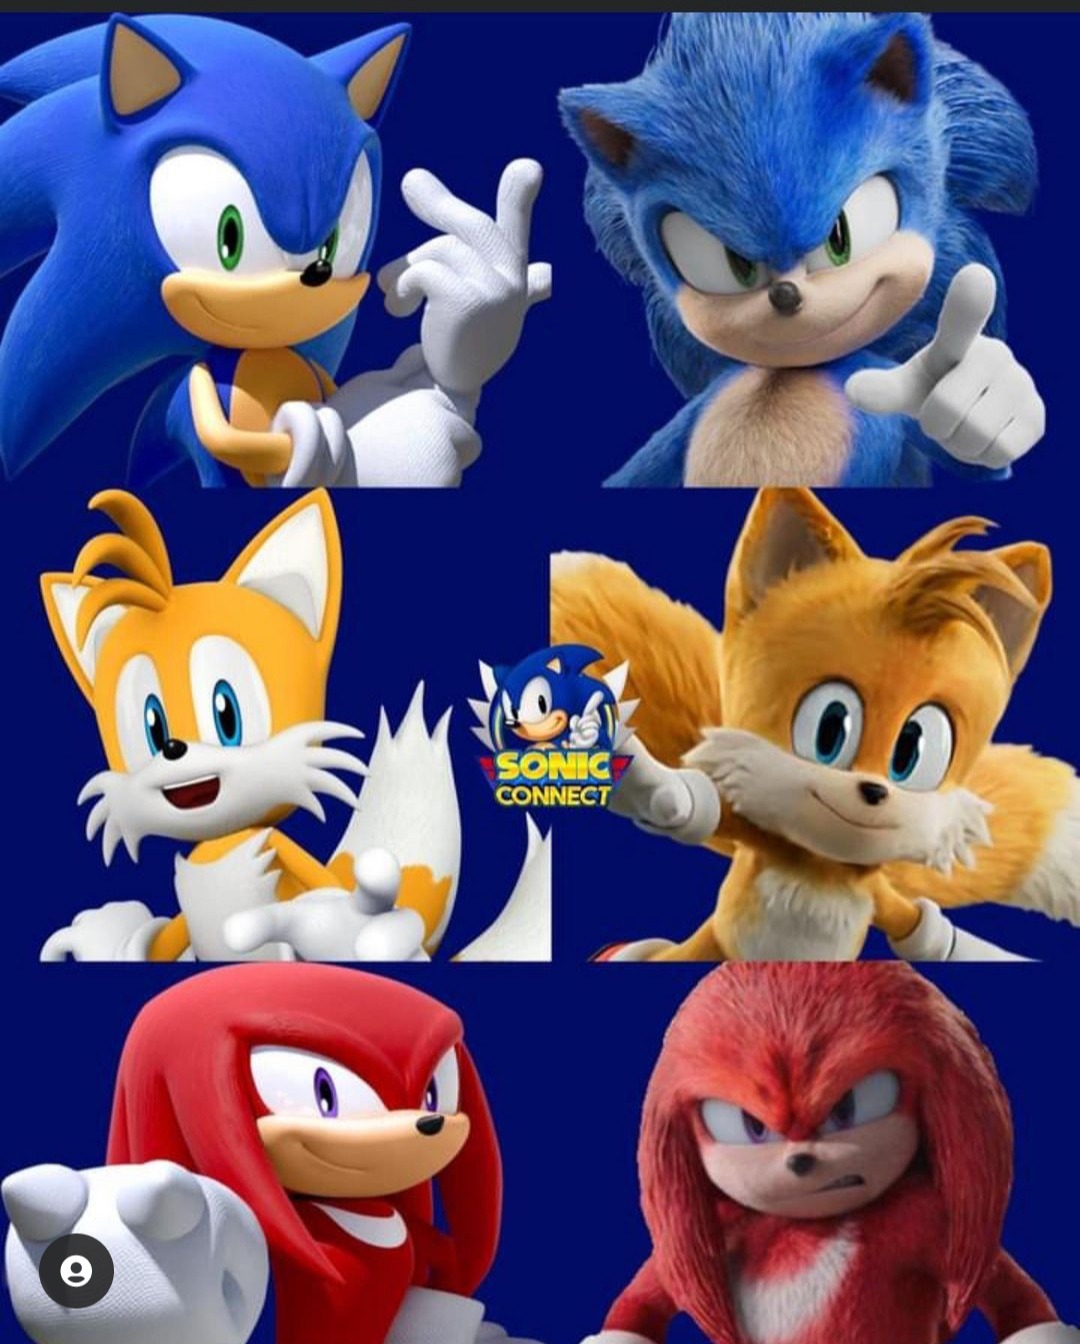 crossover meme jojo reference : r/SonicTheHedgehog